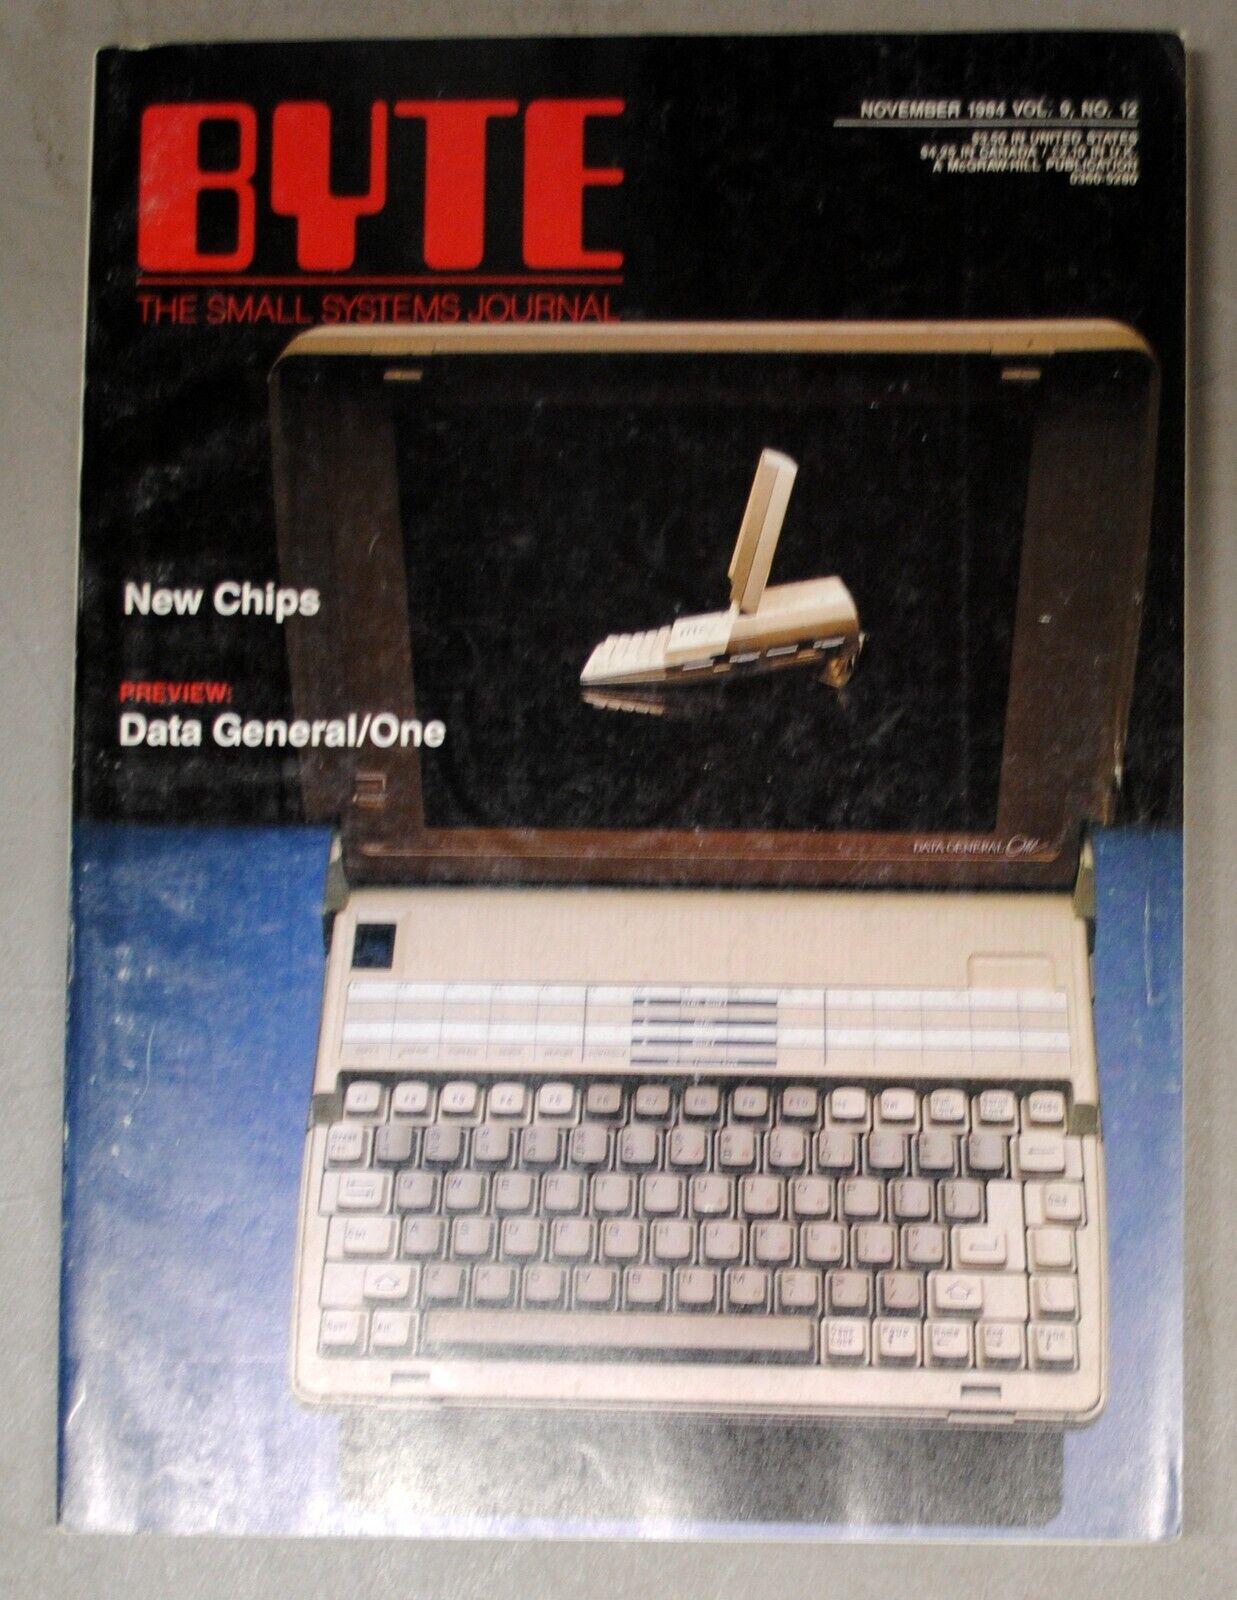 Historic Issue of BYTE  Magazine  November 1984